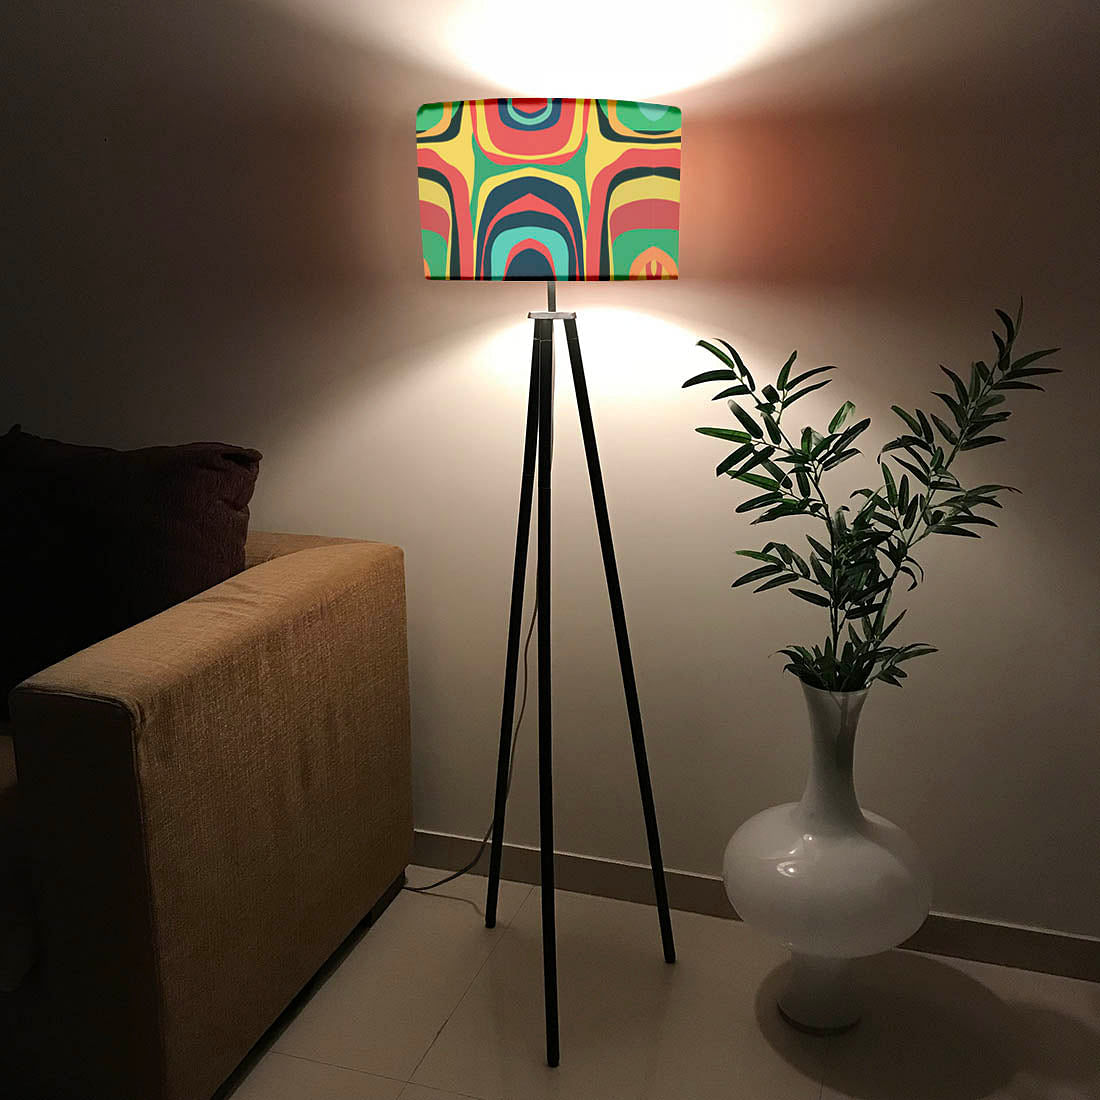 TripodFloor Lamp Decorative Light for Living Rooms - Retro Look Nutcase